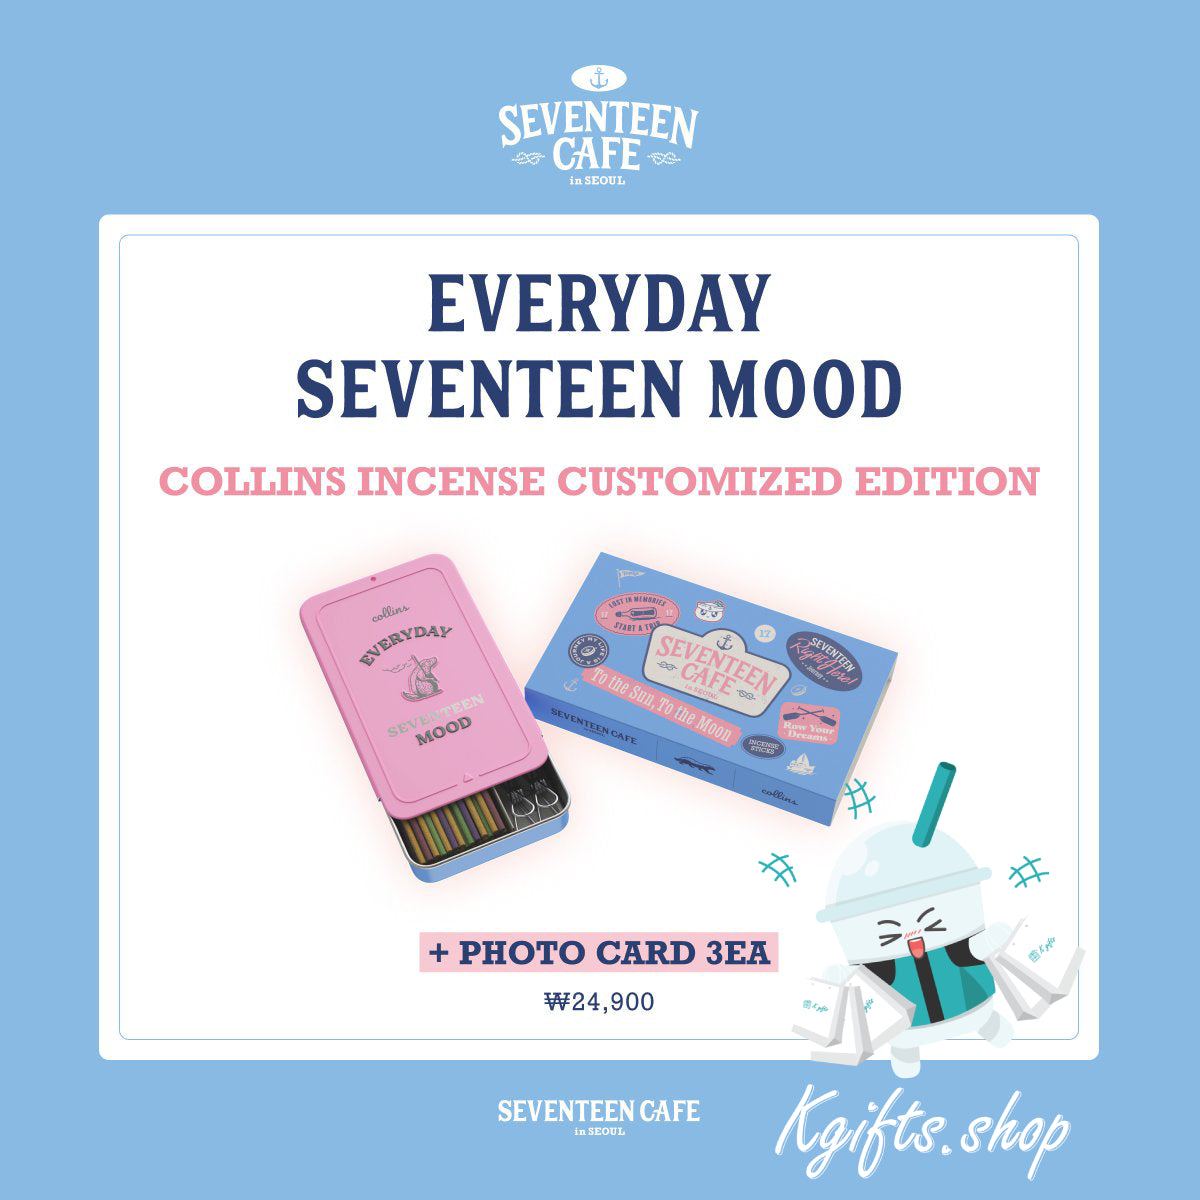 Seventeen Cafe in Seoul Merch Pre Order (choose options)